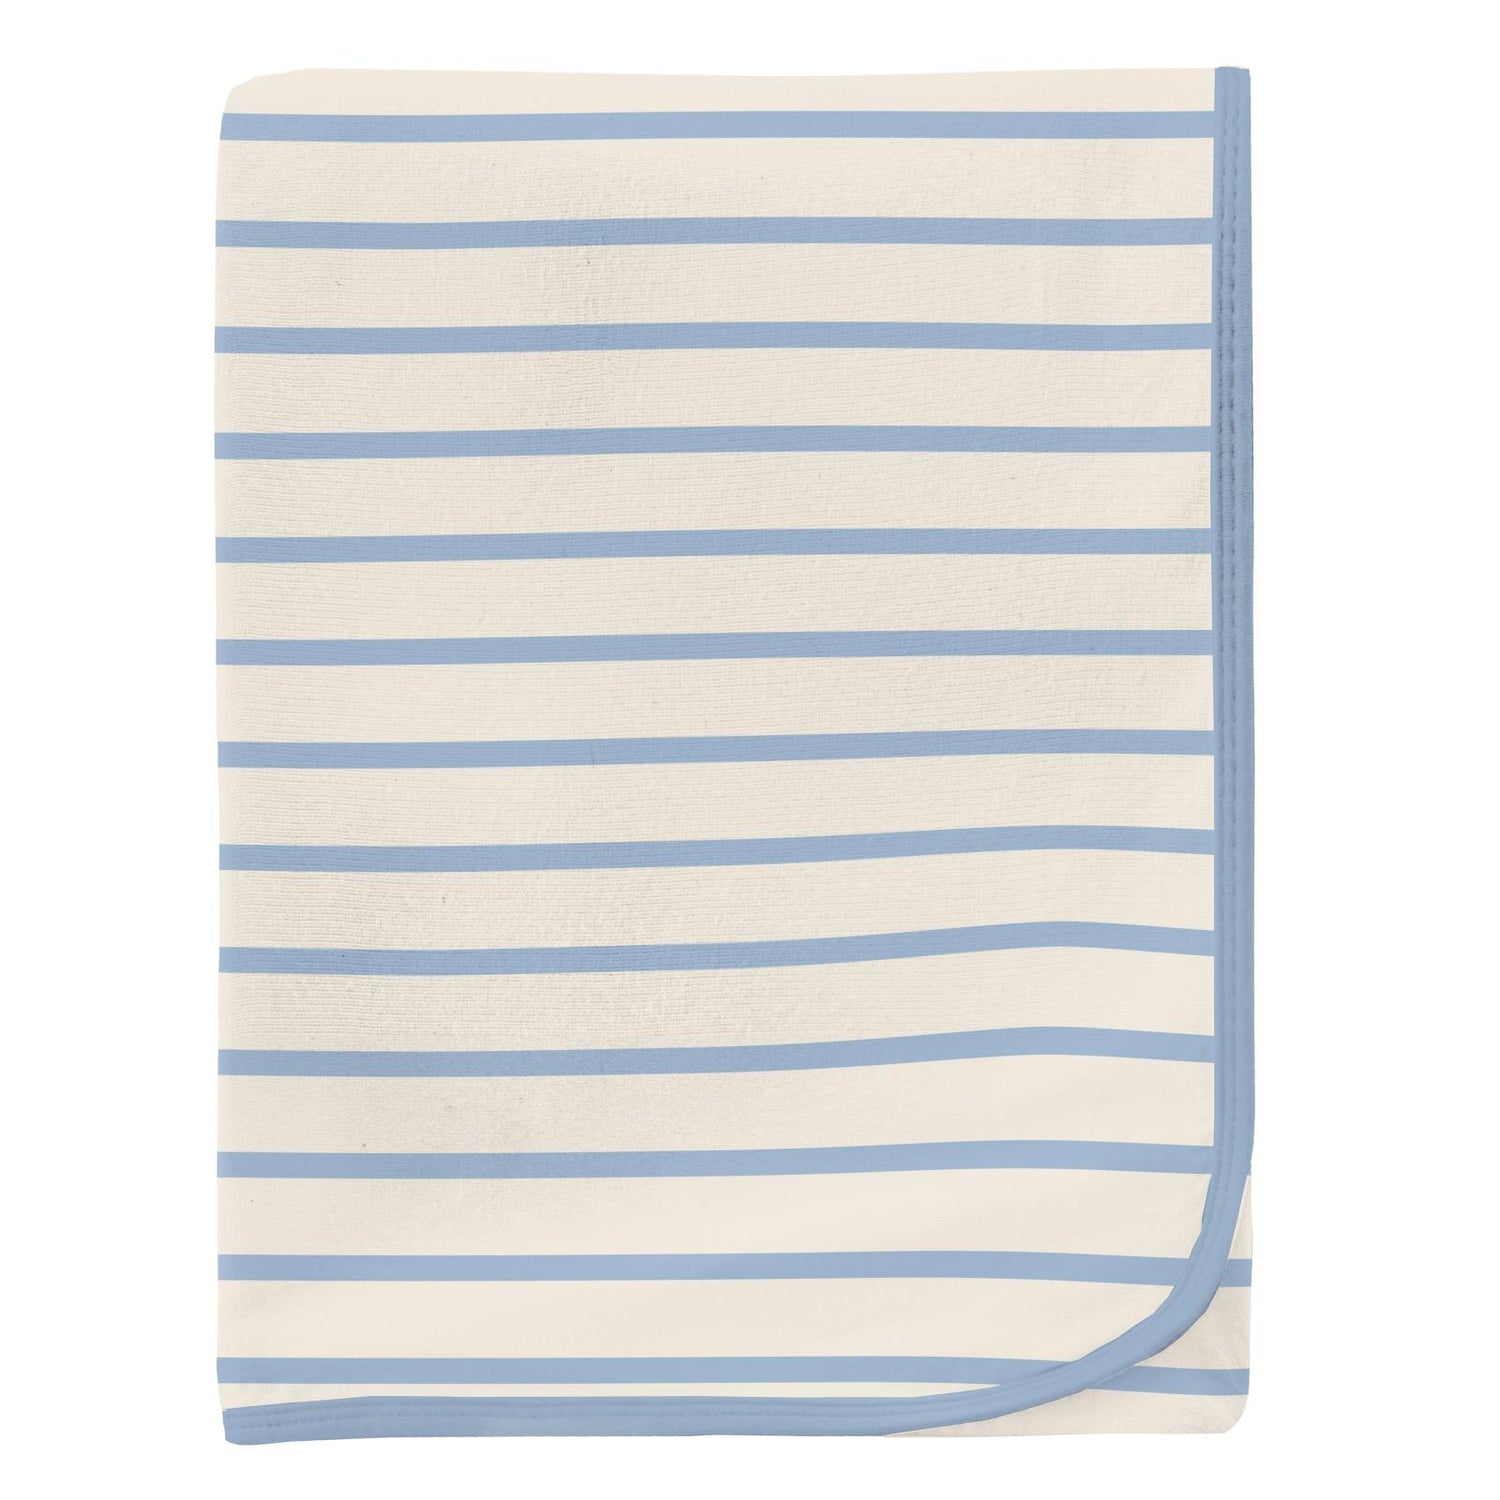 Print Swaddling Blanket in Pond Sweet Stripe